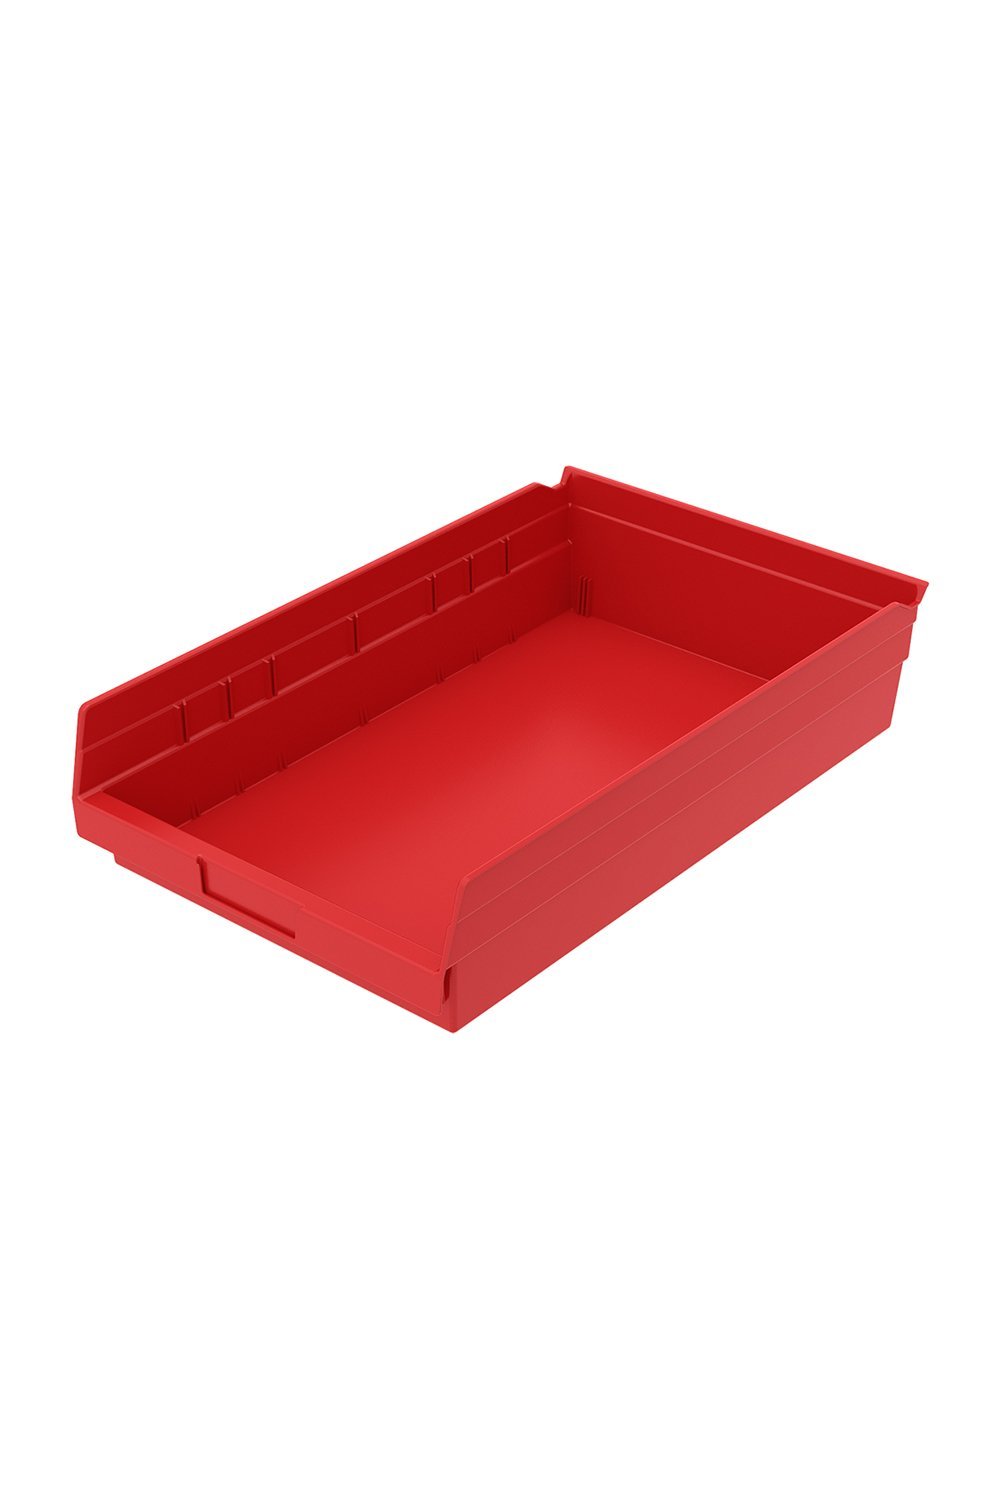 Shelf Bin for 18"D Shelves Bins & Containers Acart 17-7/8'' x 11-1/8'' x 4'' Red 